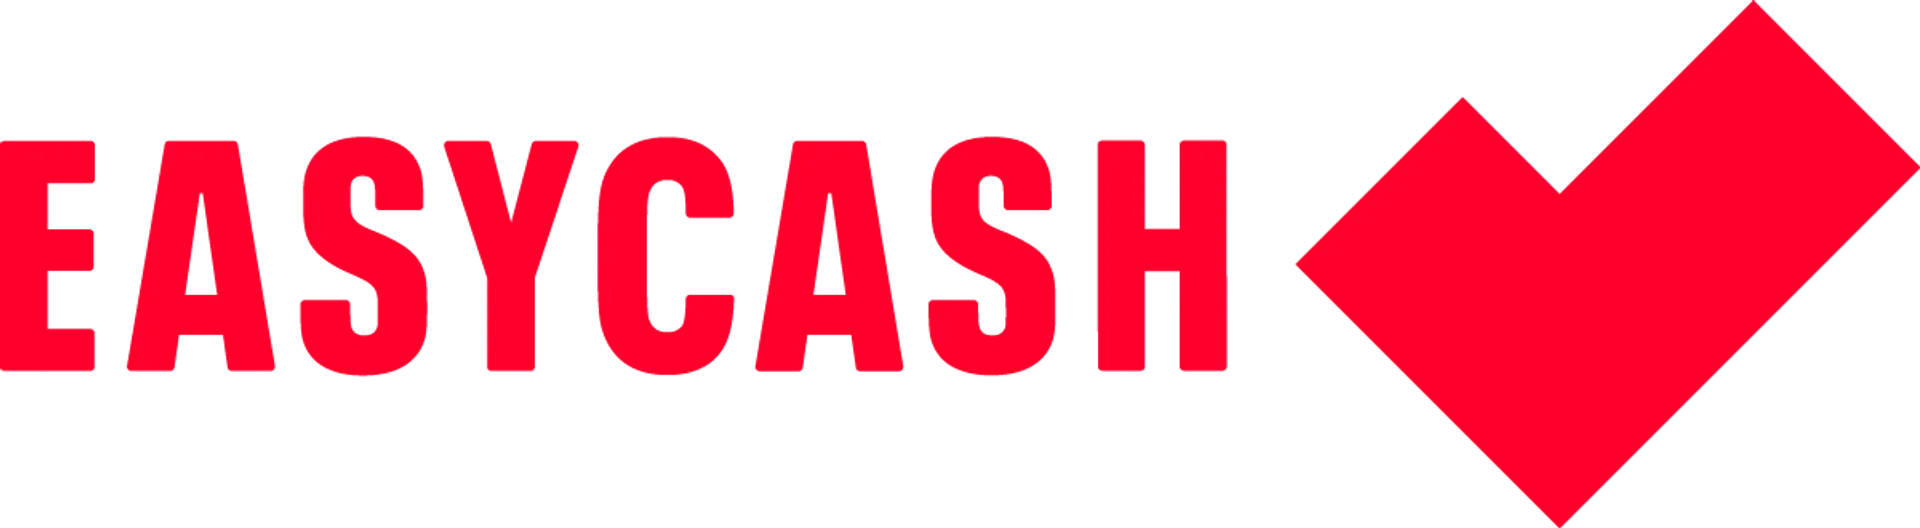 EASY CASH logo